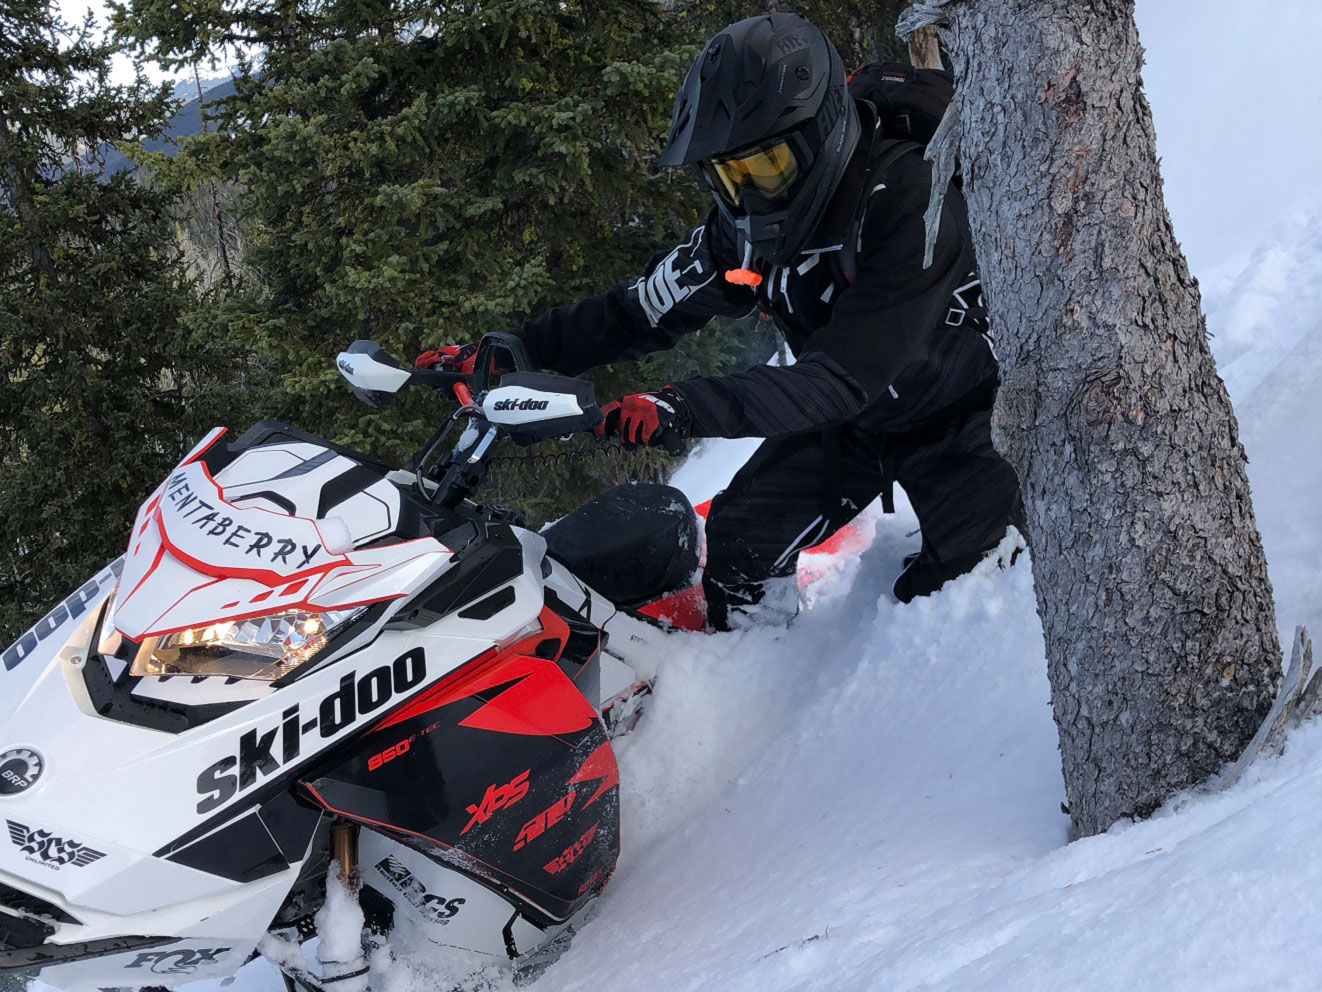 Jay Mentaberry next to his custom Ski-Doo snowmobile